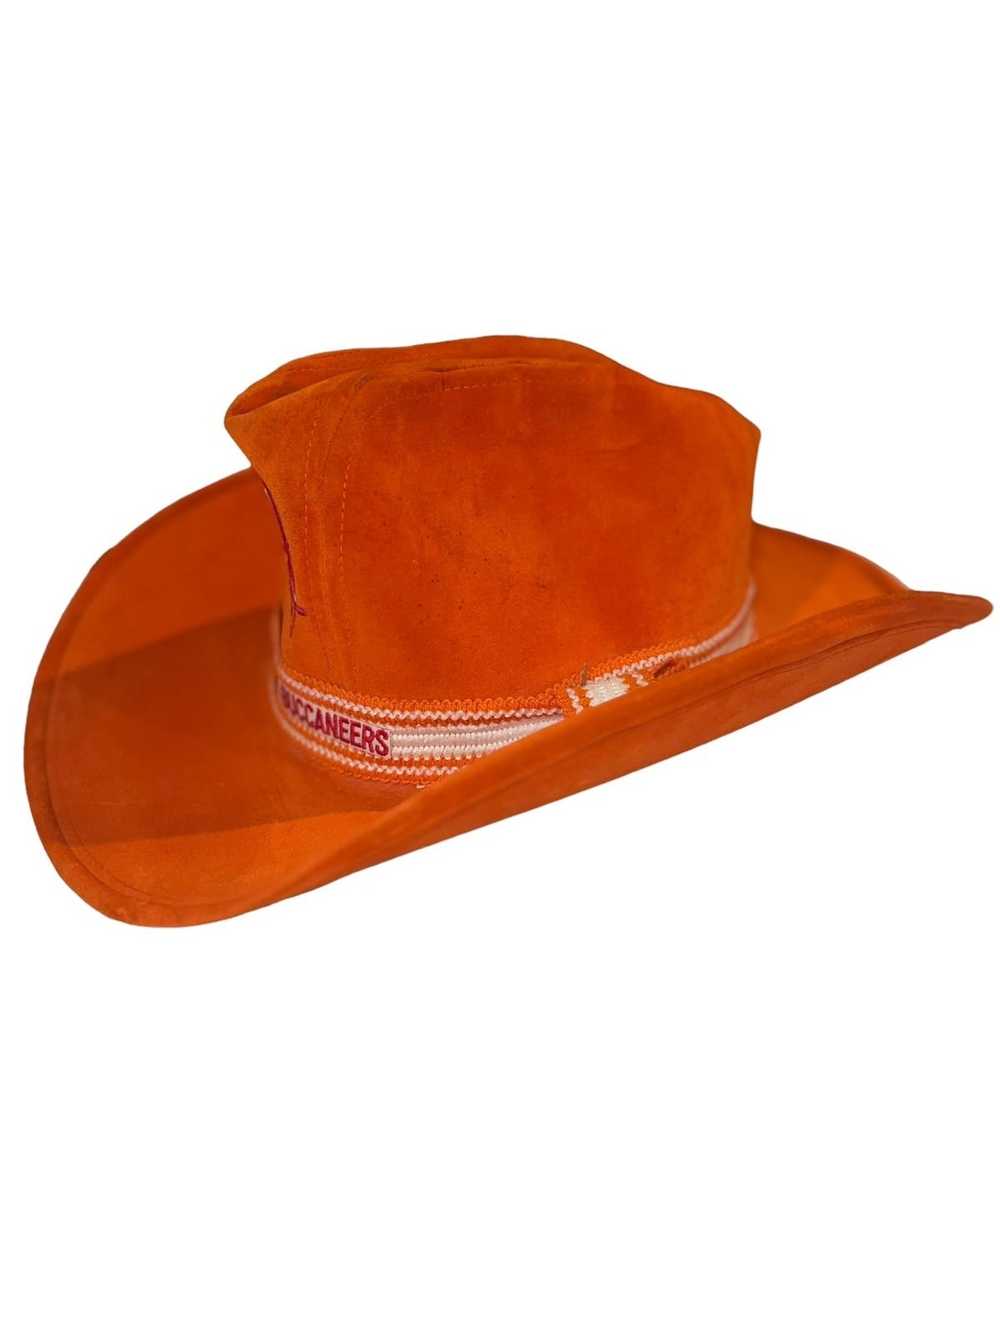 Vintage Rare Tampa bay bucs orange cowboy hat sla… - image 3